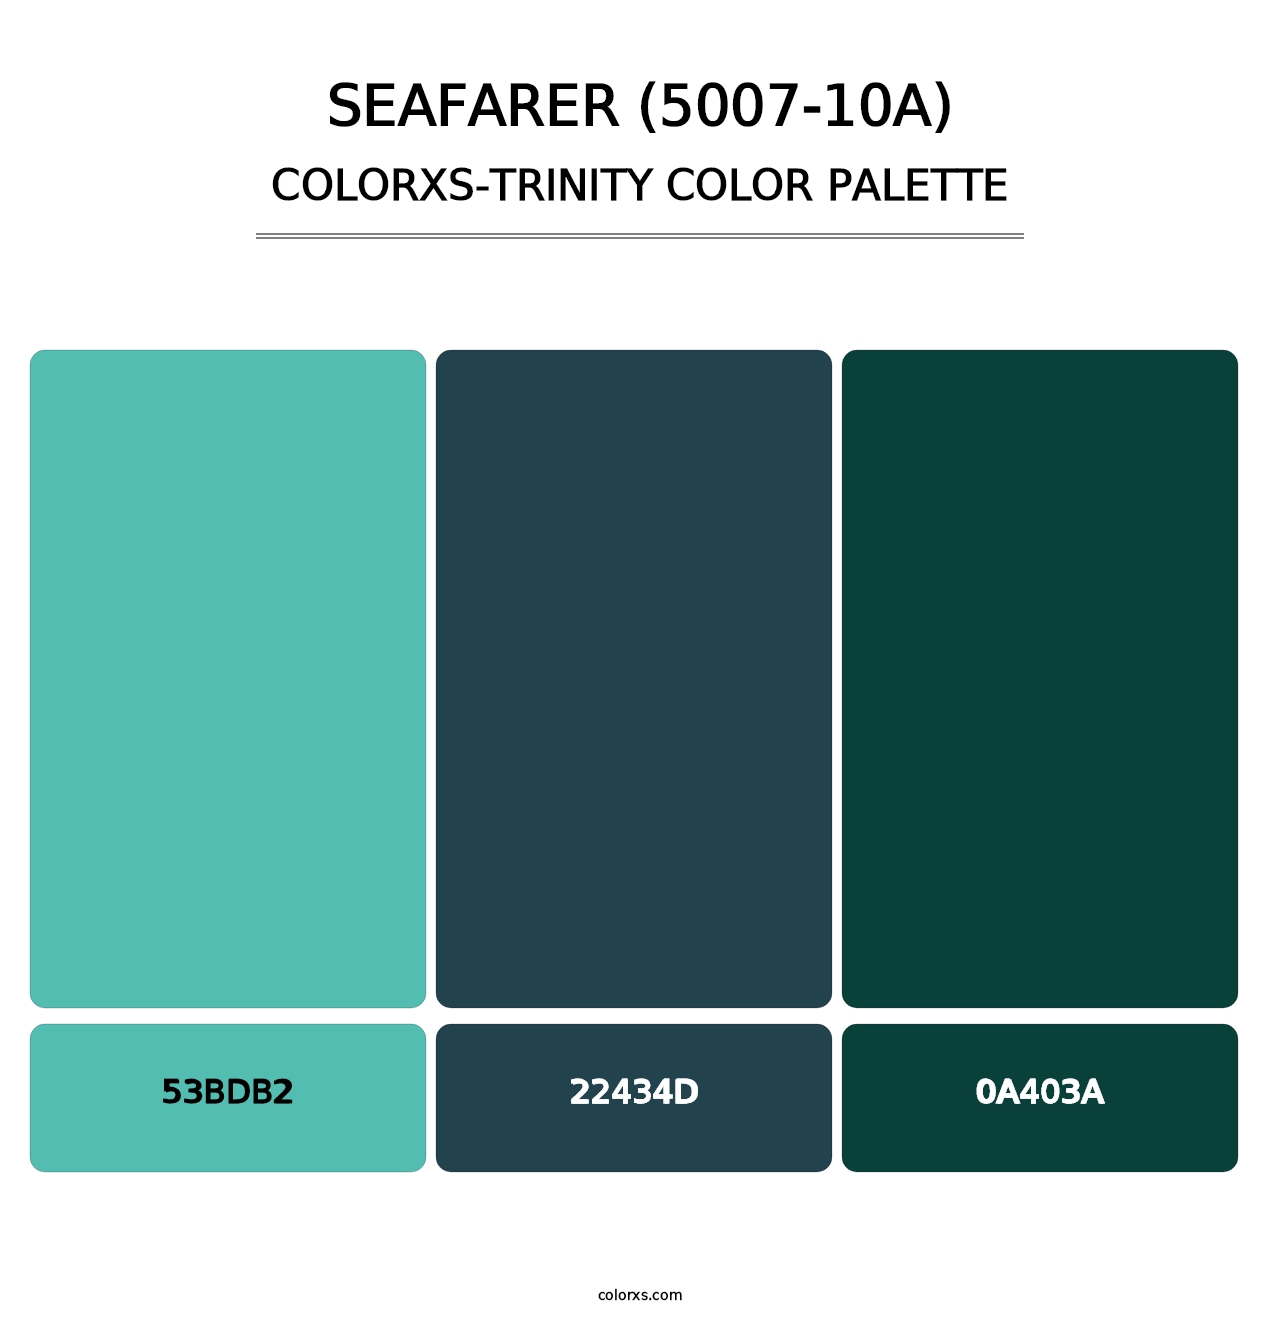 Seafarer (5007-10A) - Colorxs Trinity Palette